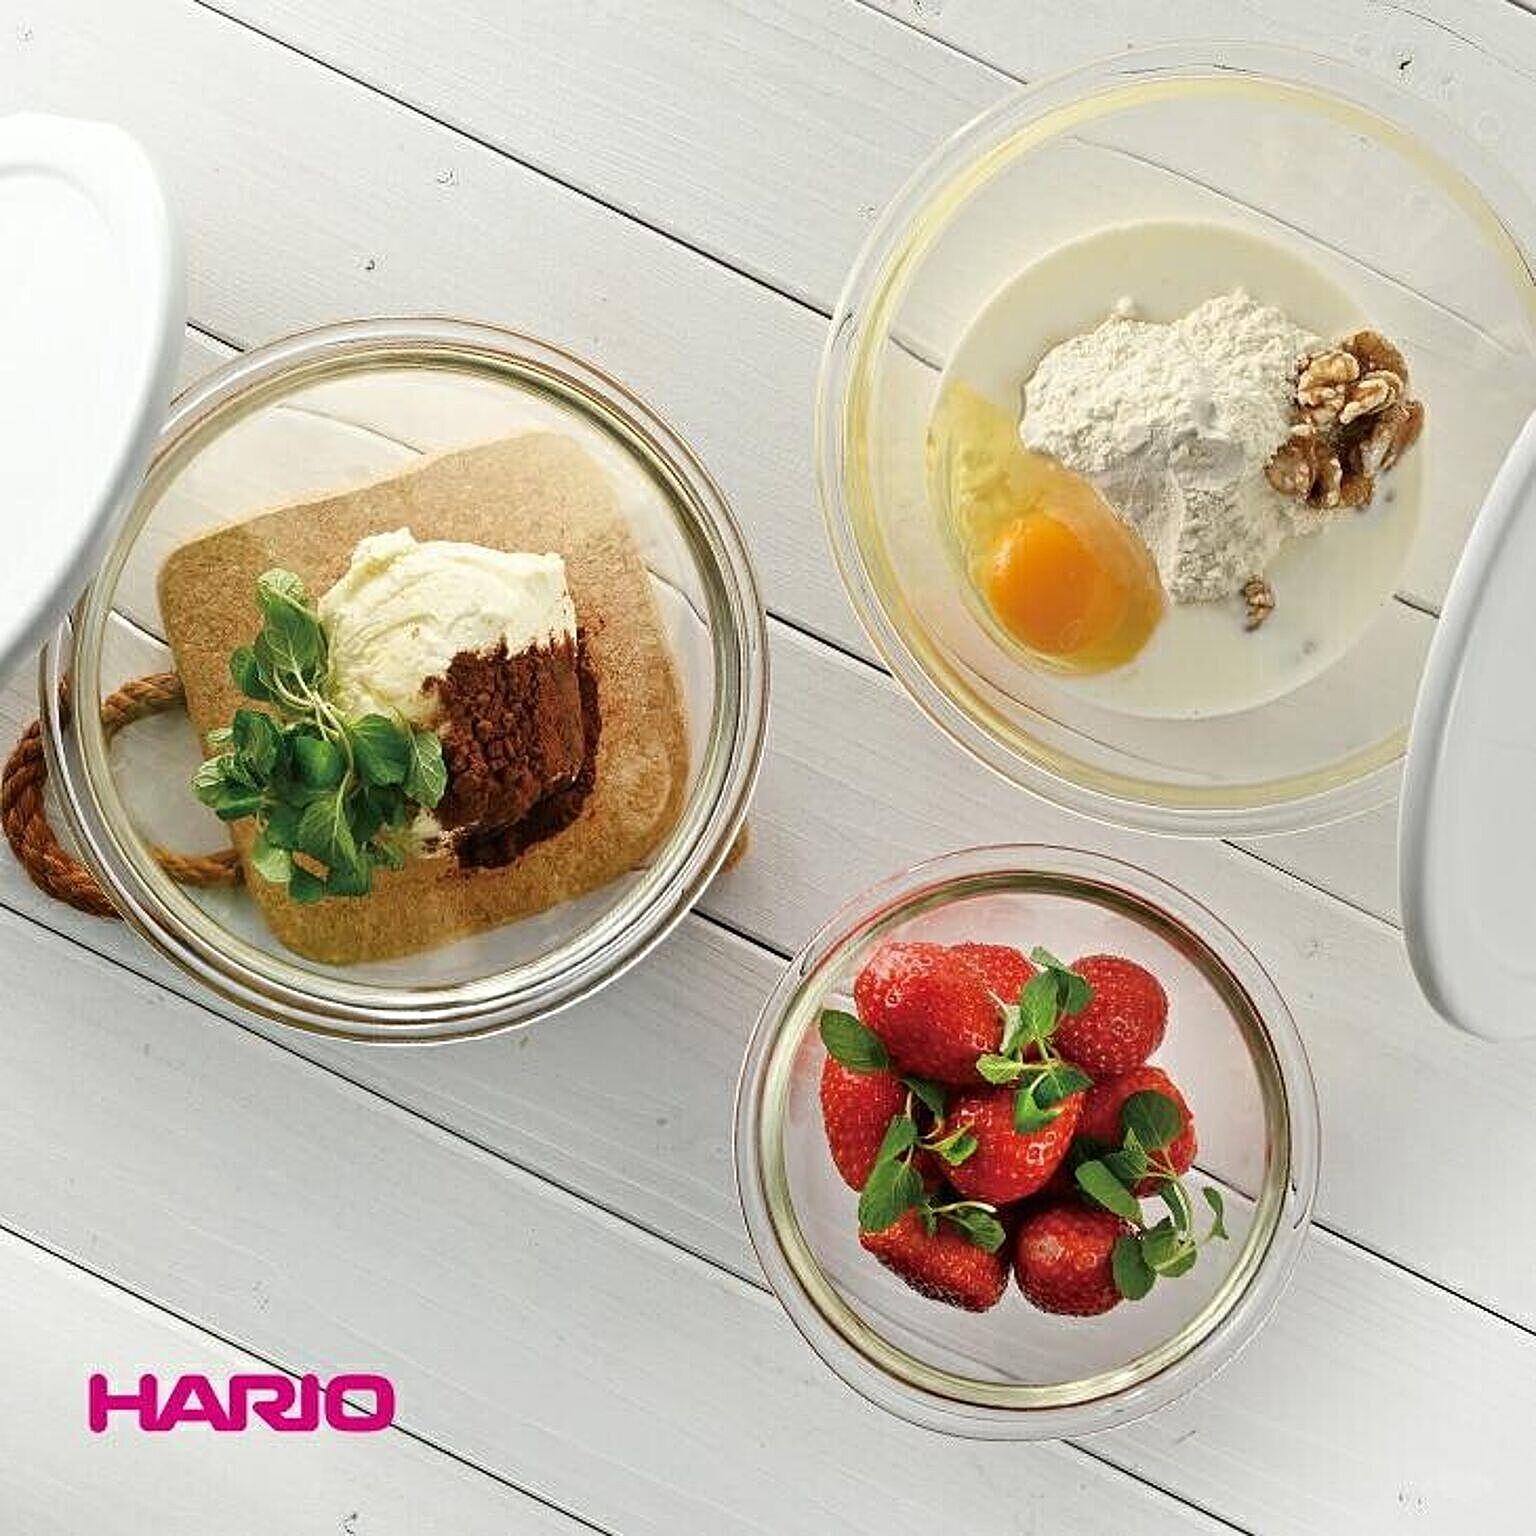 HARIO ハリオ 耐熱ガラス製 ボウル 3個セット ガラスボウル 水切り口 フタ付き 調理 容器 ガラス 食器 保存容器 電子レンジ オーブン対応 食洗機対応 日本製